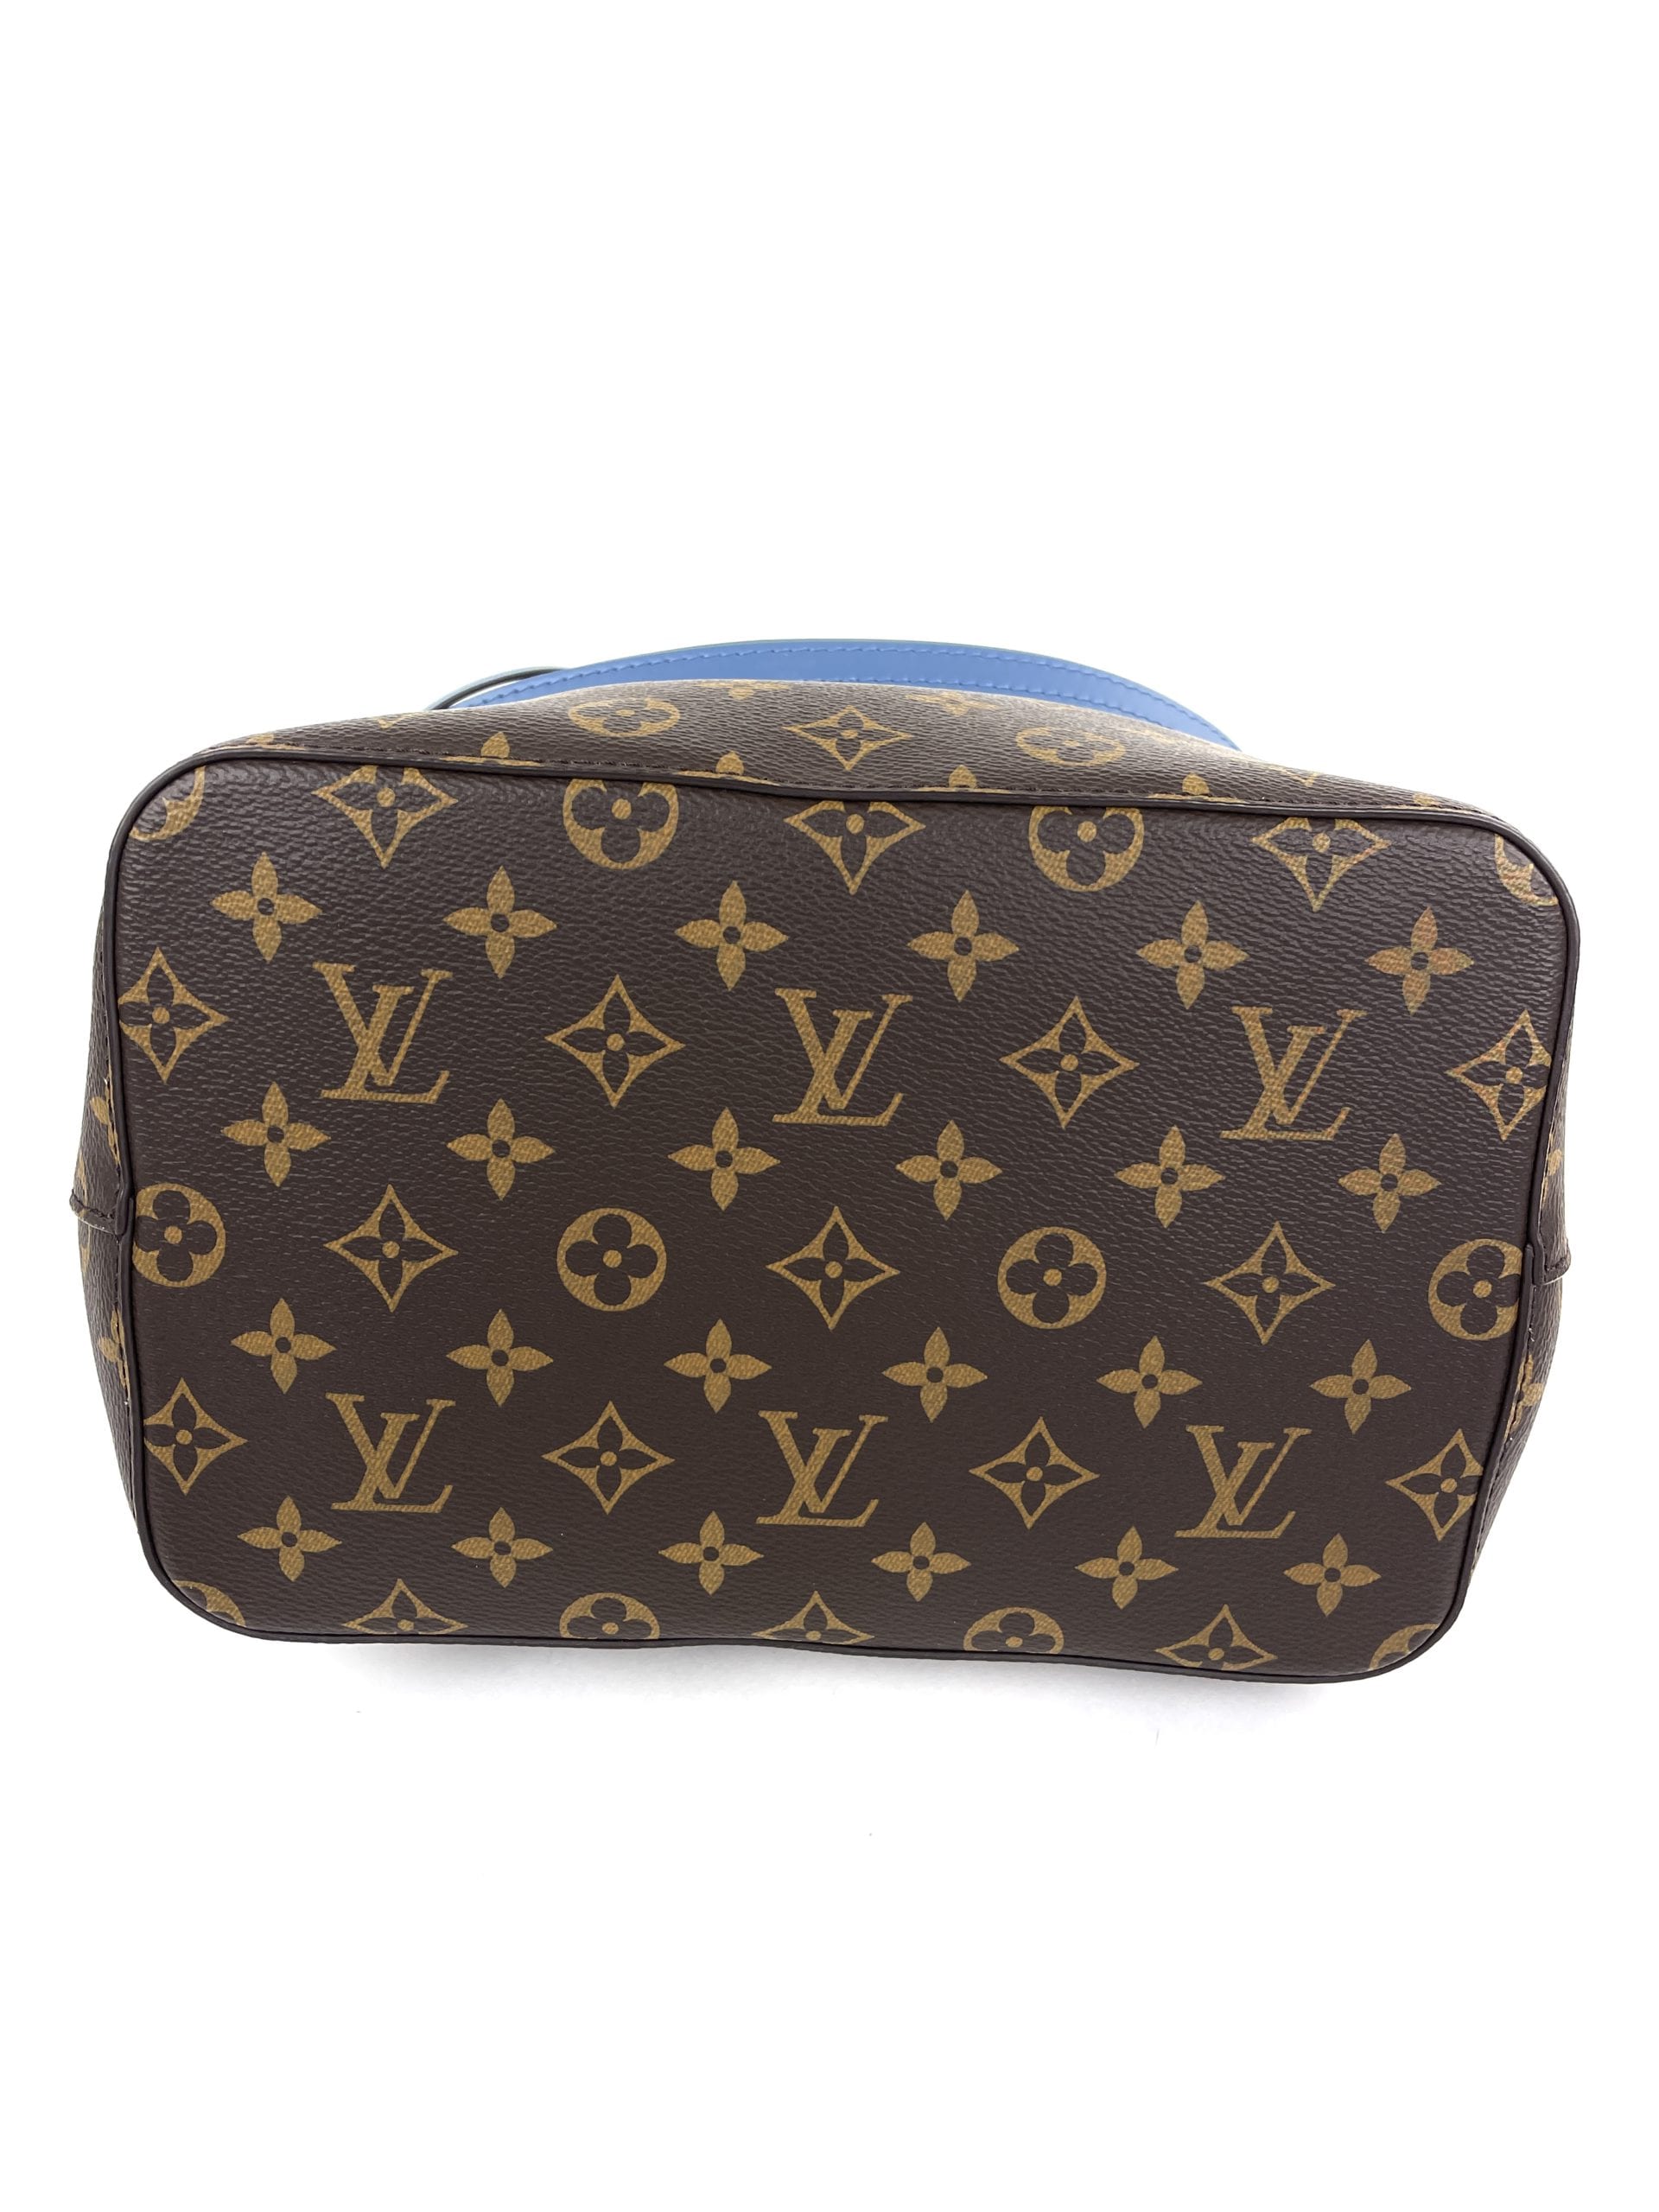 Louis Vuitton 2009 Monogram Neo Noe Handbag for Sale in Lake Worth